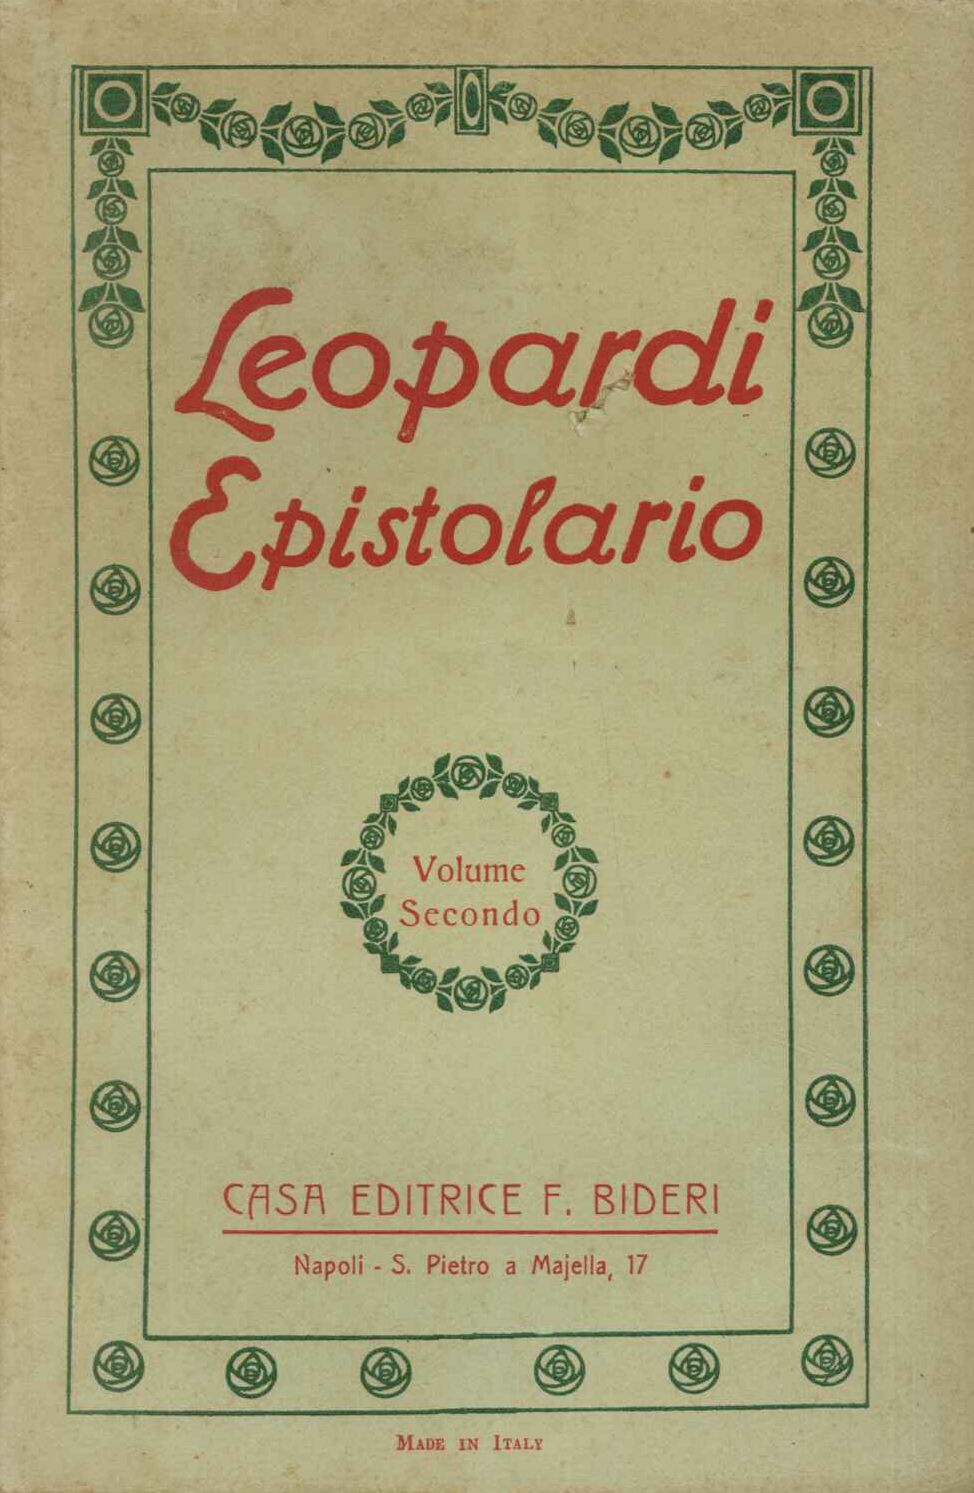 Opere di Giacomo Leopardi volume secondo epistolario